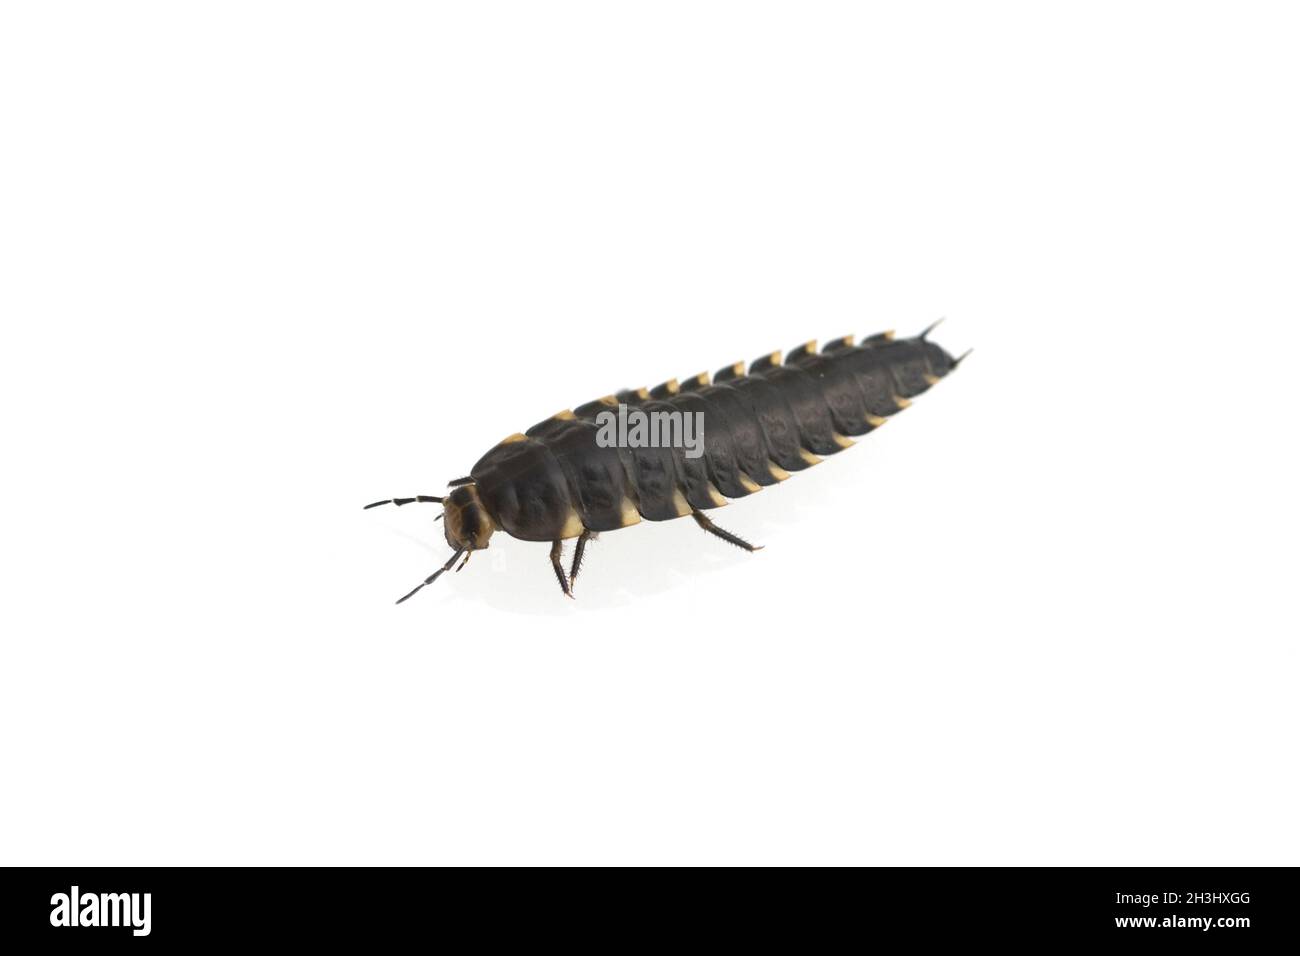 Laufkaeferlarve, Laufkaefer; larva, Carabidae; Foto de stock